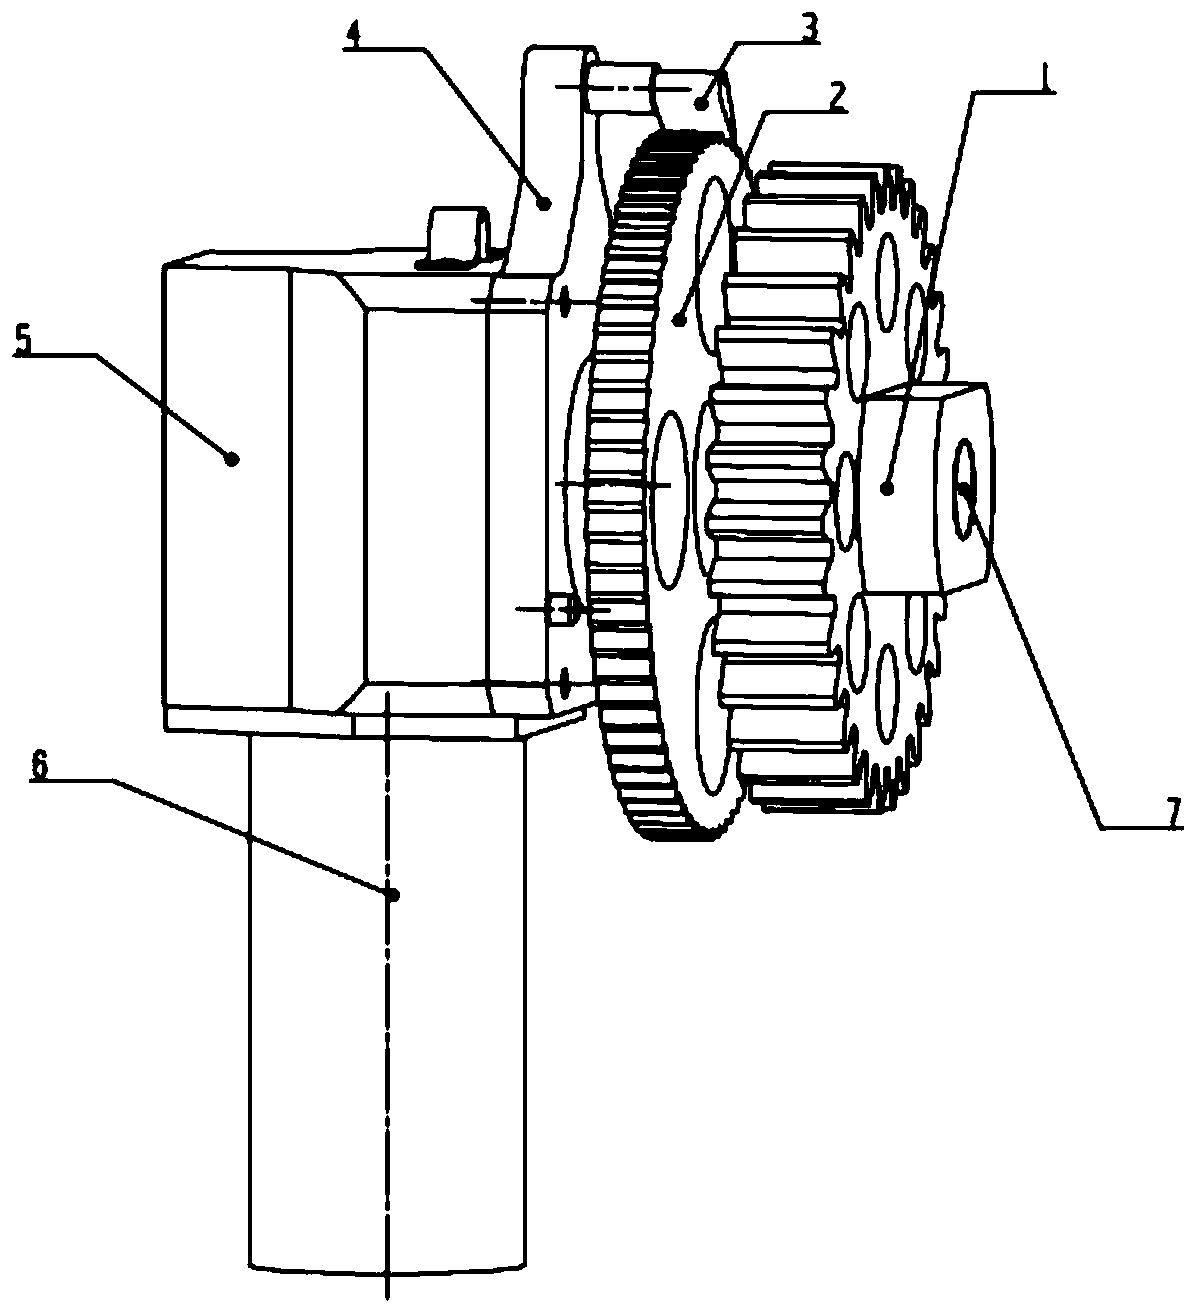 A lens propulsion actuator